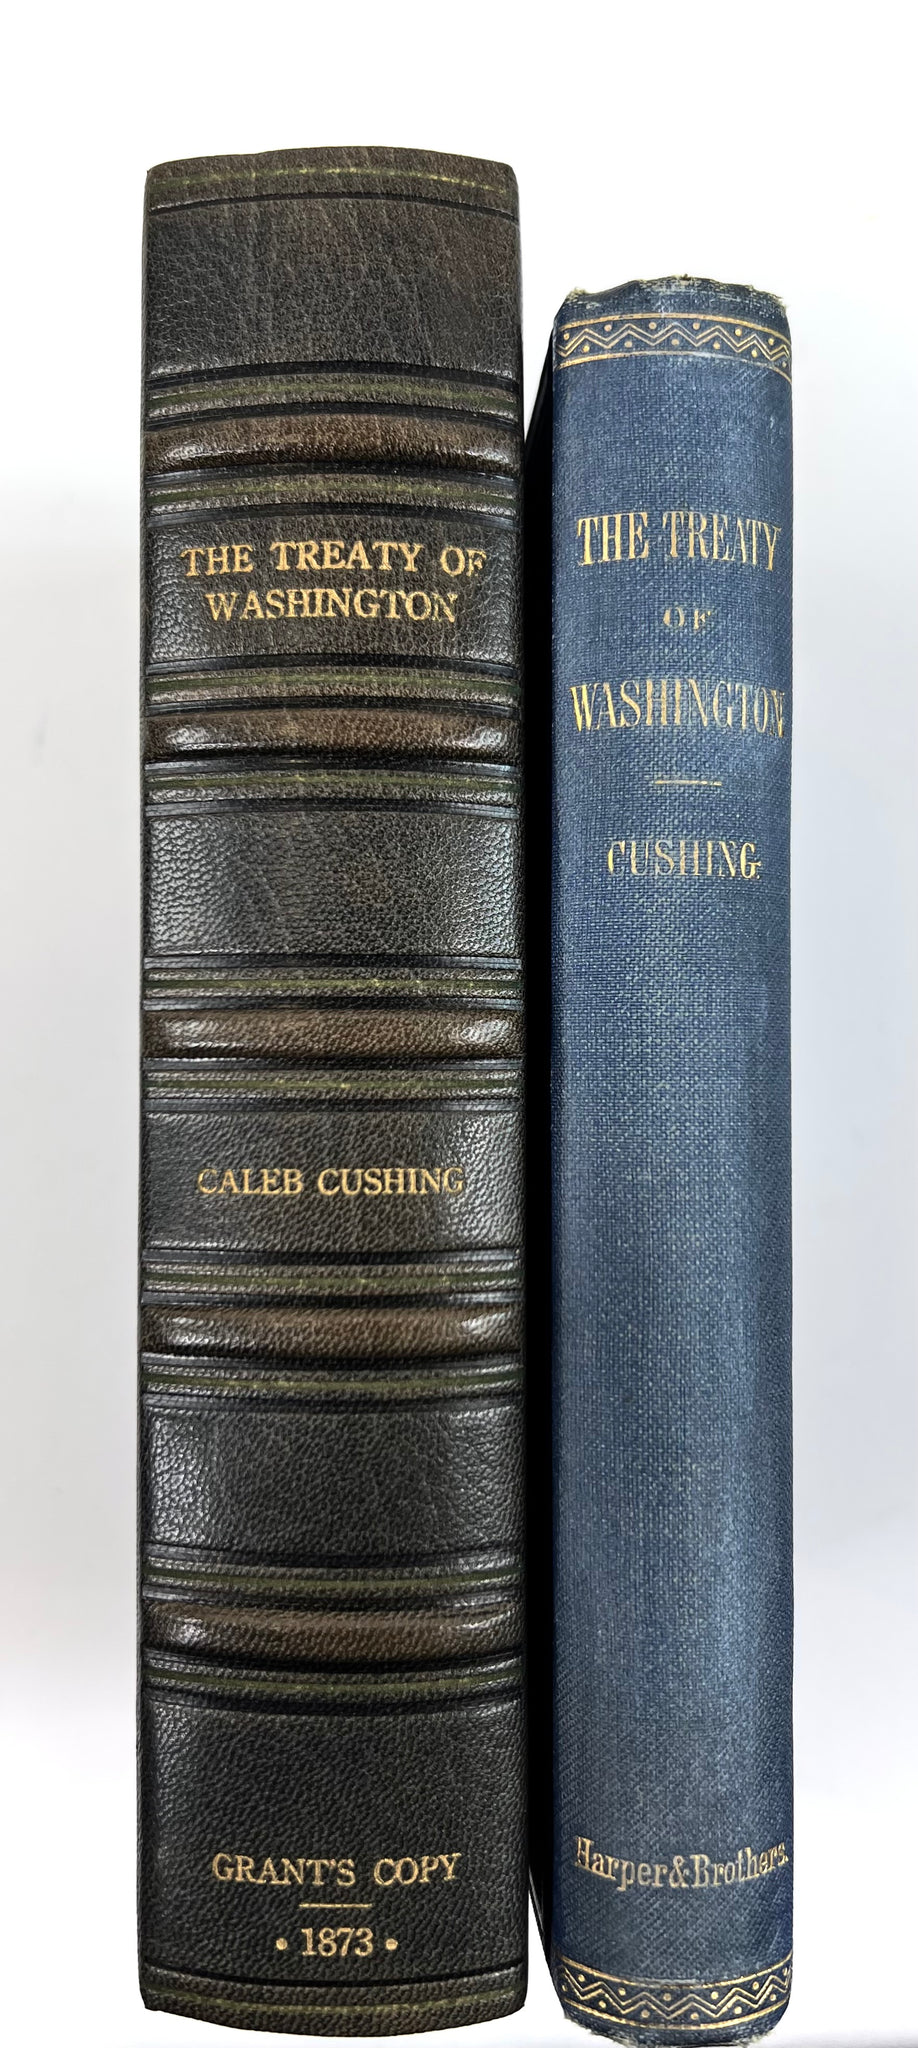 CUSHING, Caleb. The Treaty of Washington.